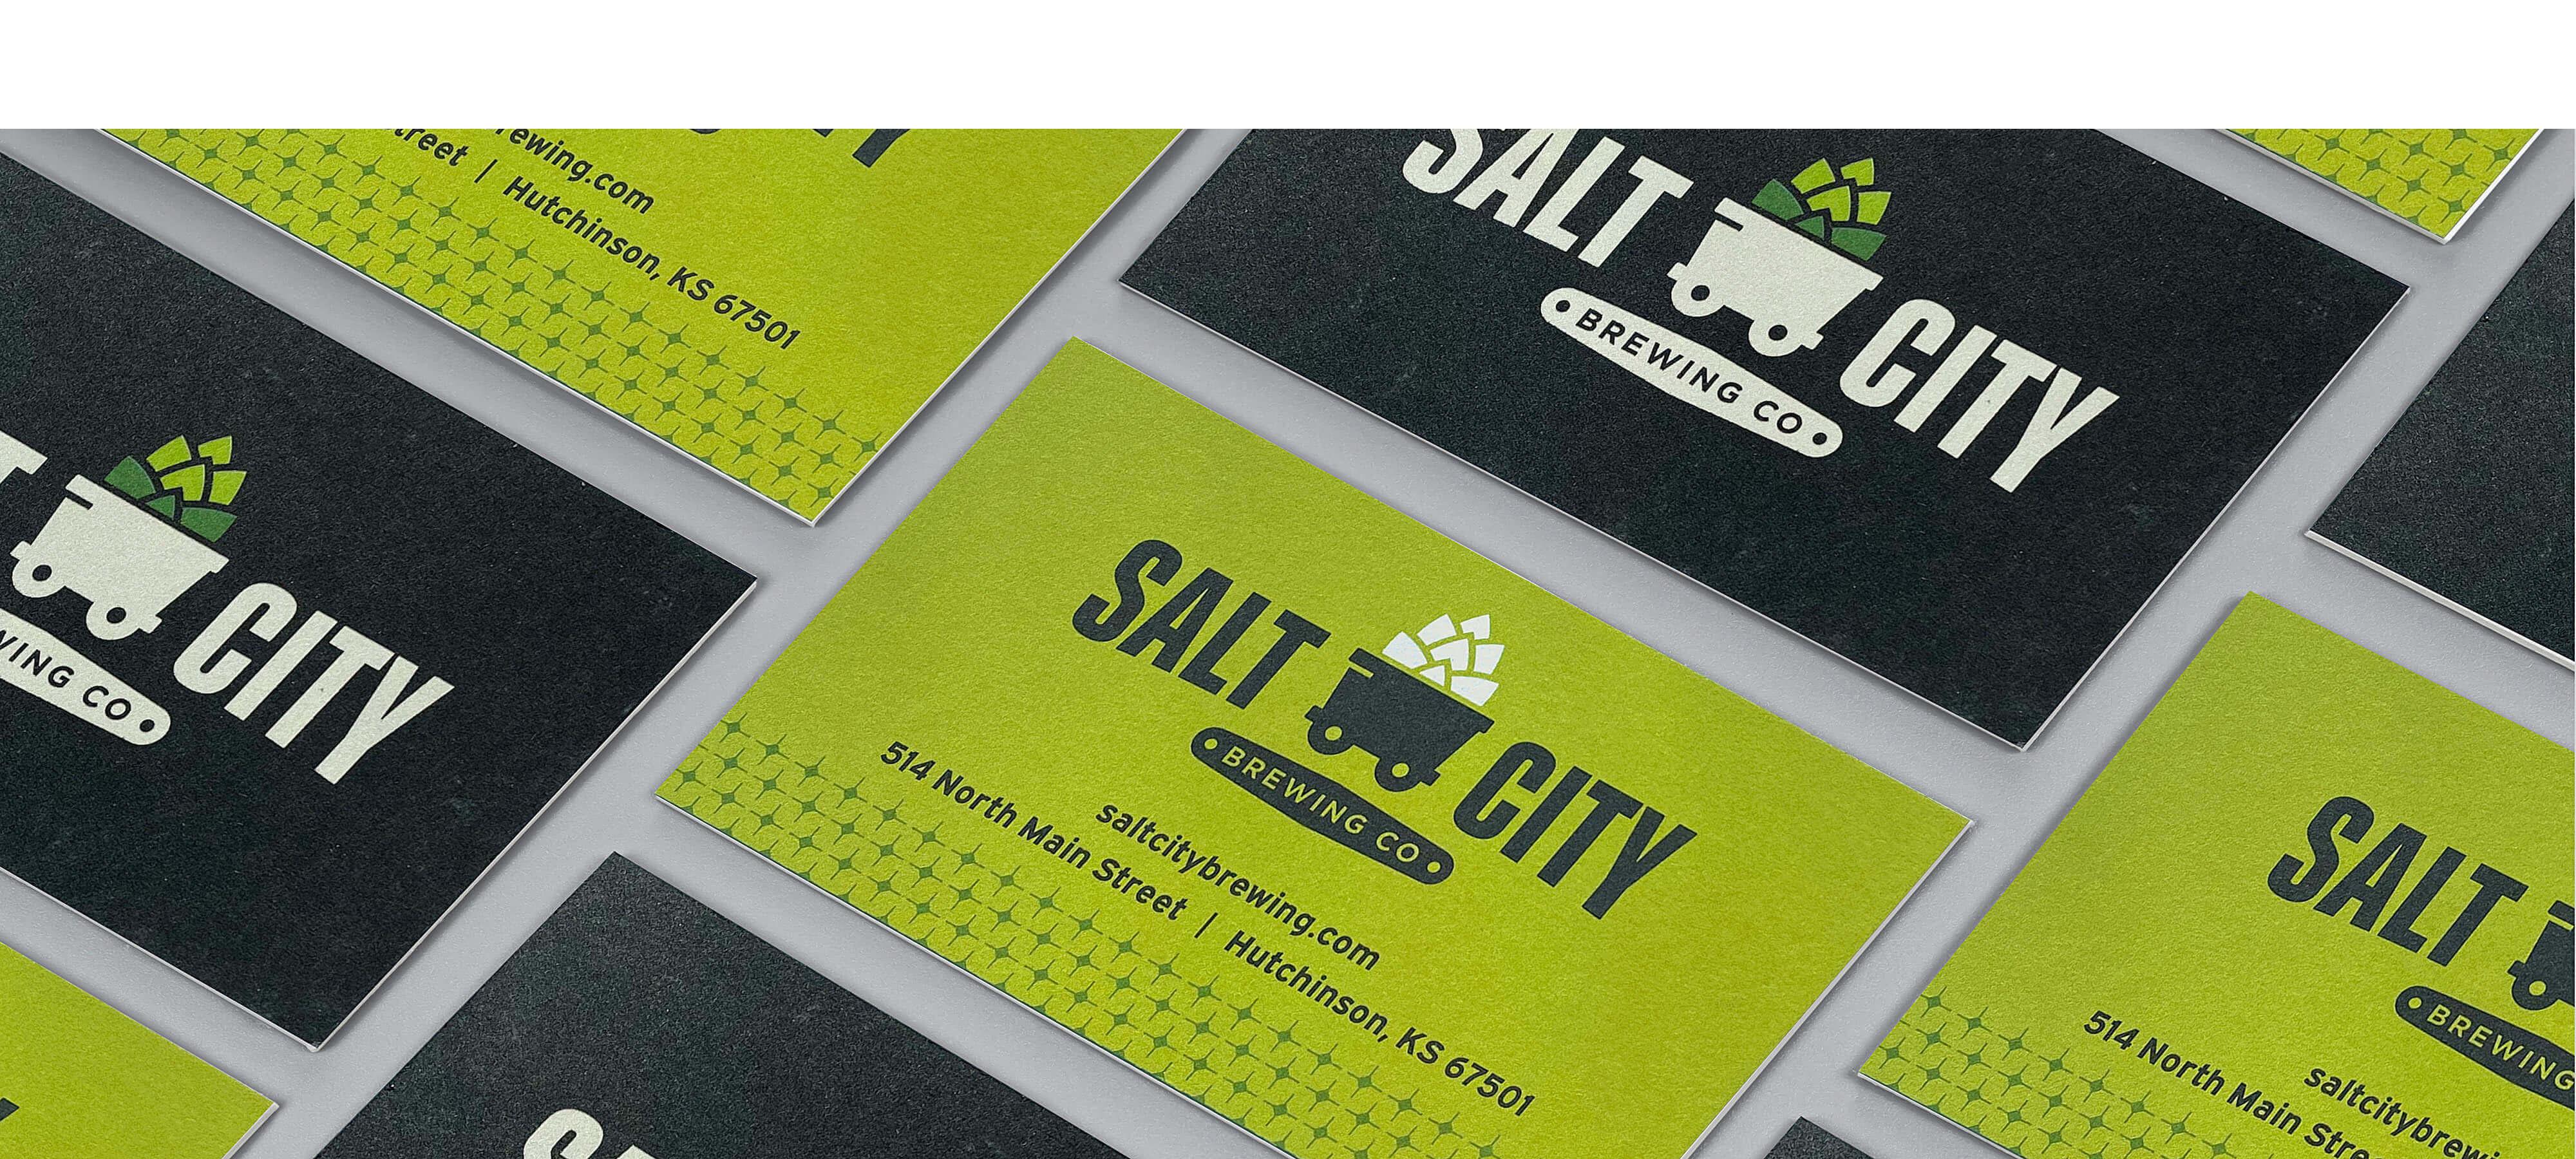 Salt City Brewing branded business cards image